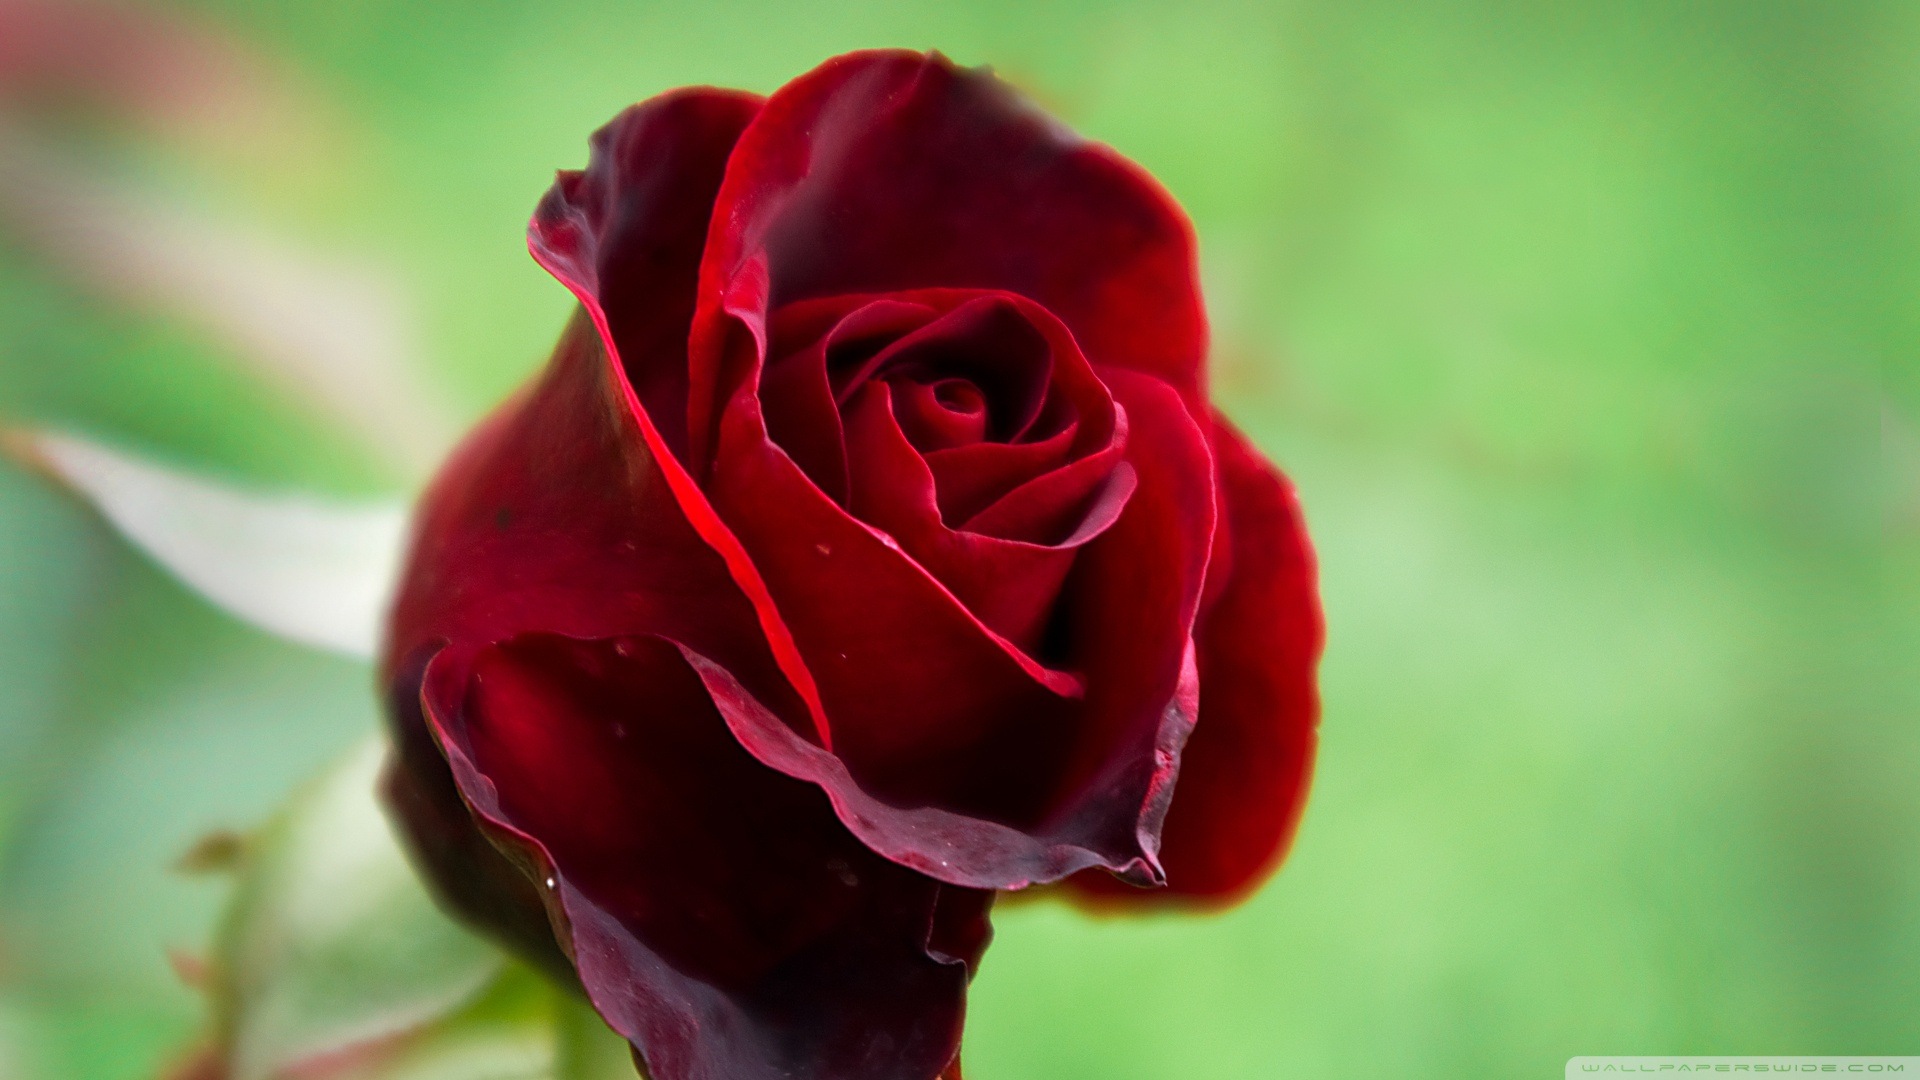 Free Download Beautiful Red Rose Hd Flower Wallpaper For Desktop